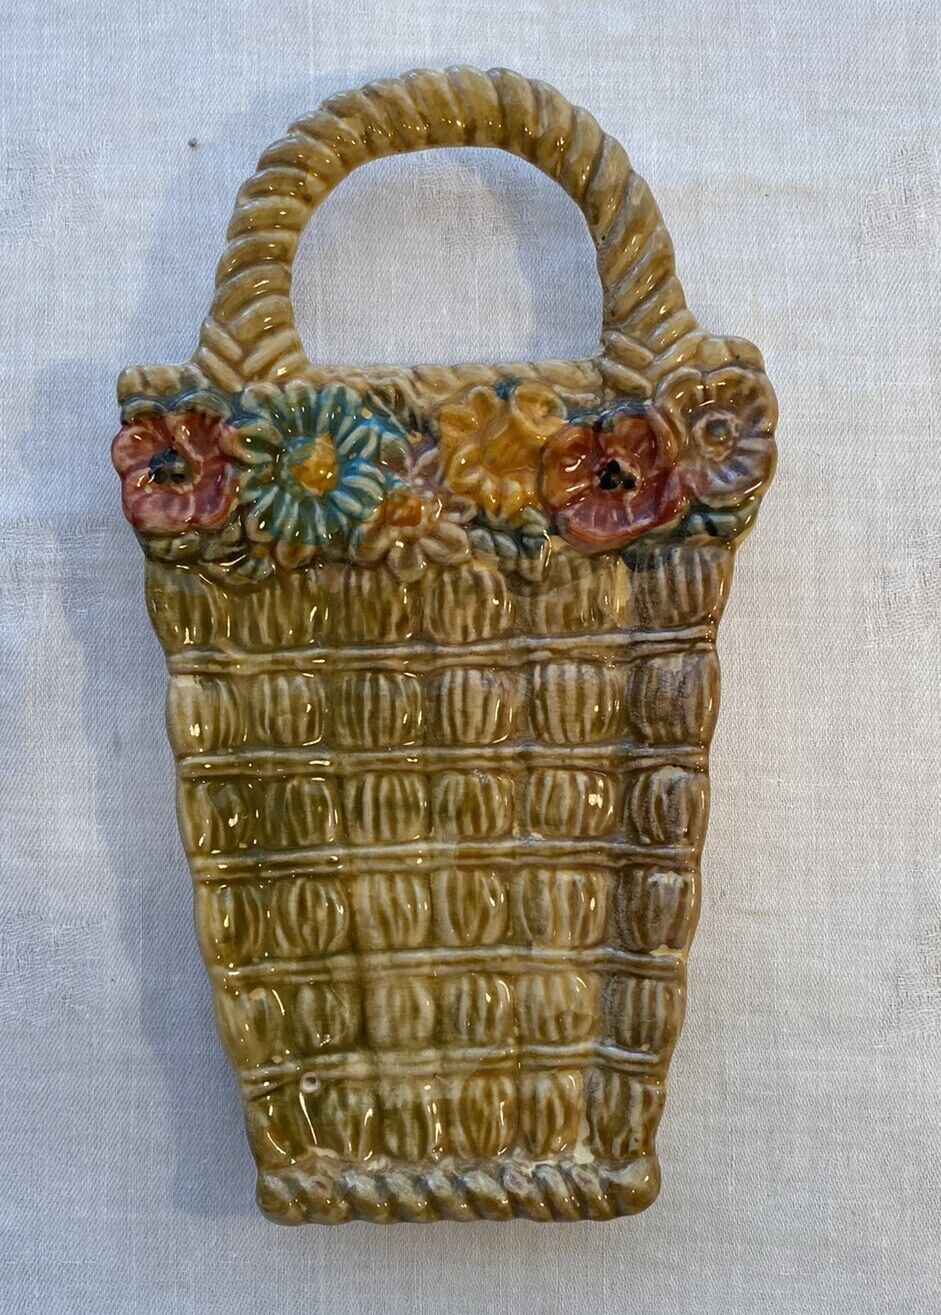 Vintage Italian Pottery Flower Basket Spoon Rest Ceramic Hanging Wall Plate